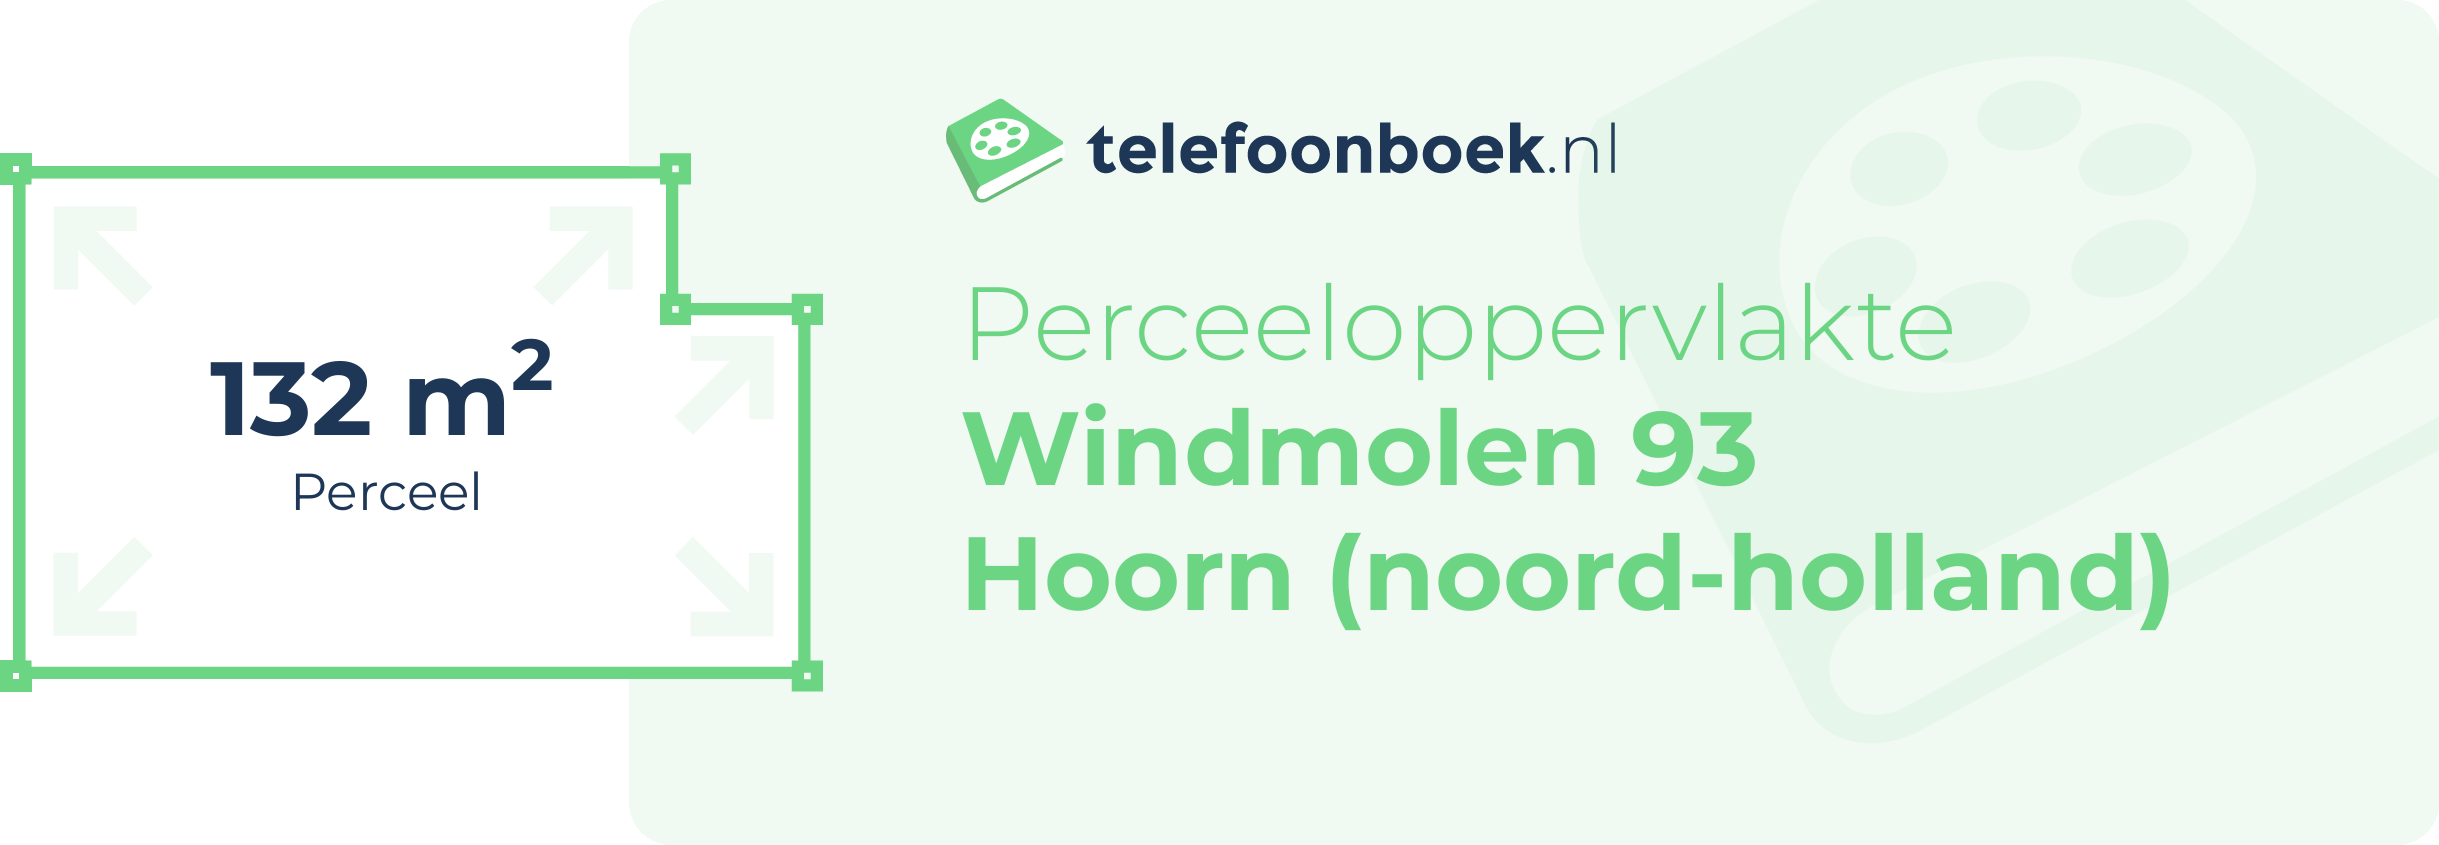 Perceeloppervlakte Windmolen 93 Hoorn (Noord-Holland)